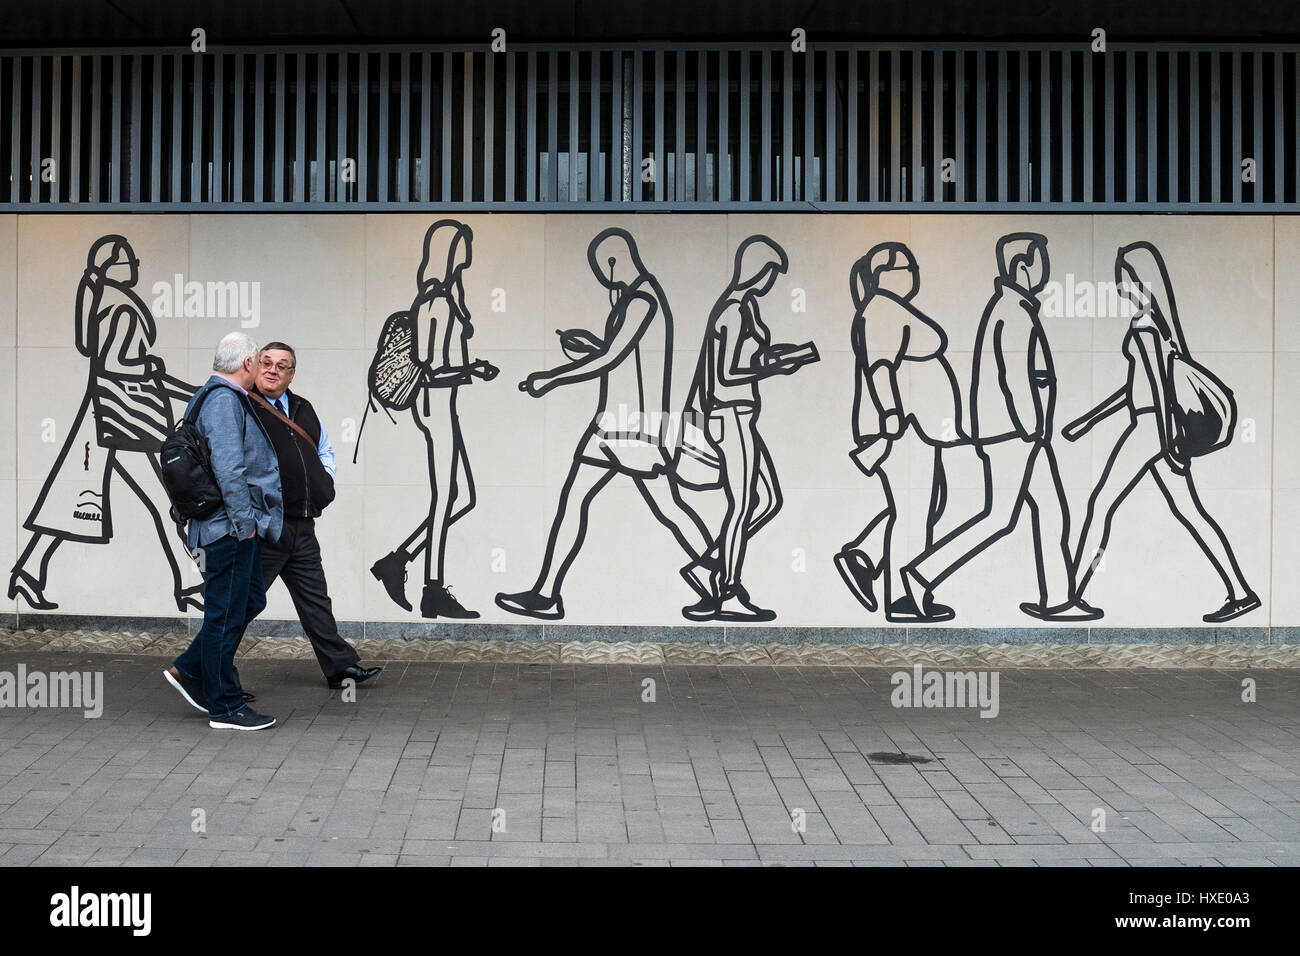 Pedestrains Walking Artwork Mural Public Art Wall Figures London Stock Photo